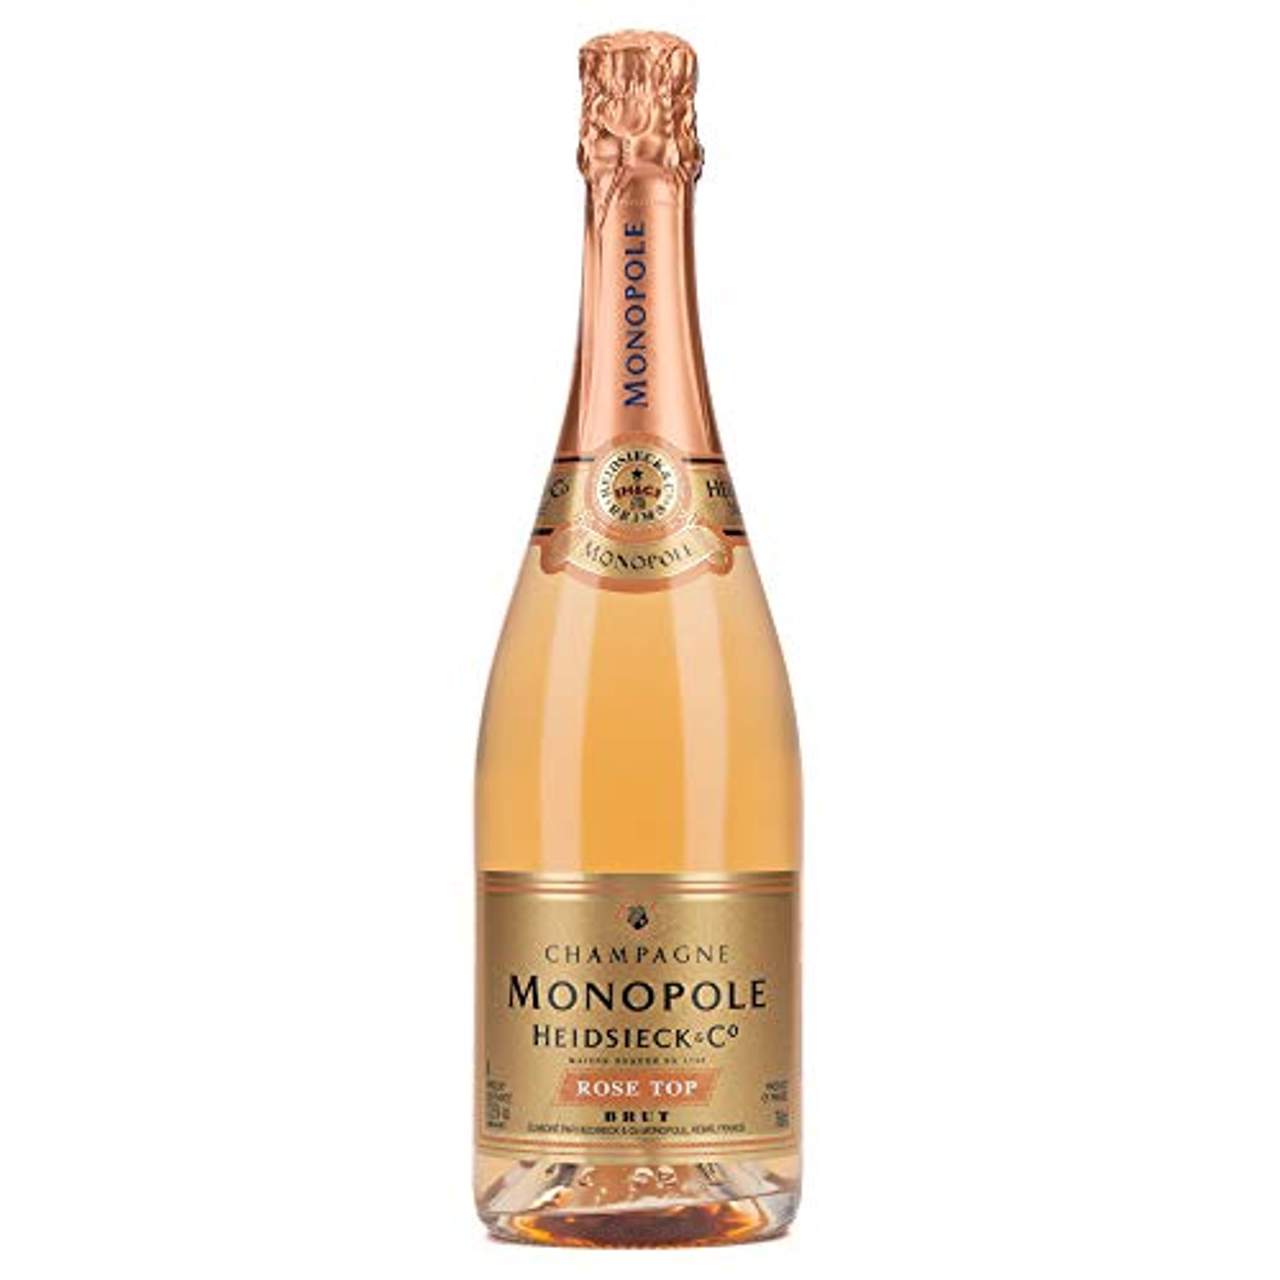 Heidsieck & Co Monopole Rosé Top Brut Champagner